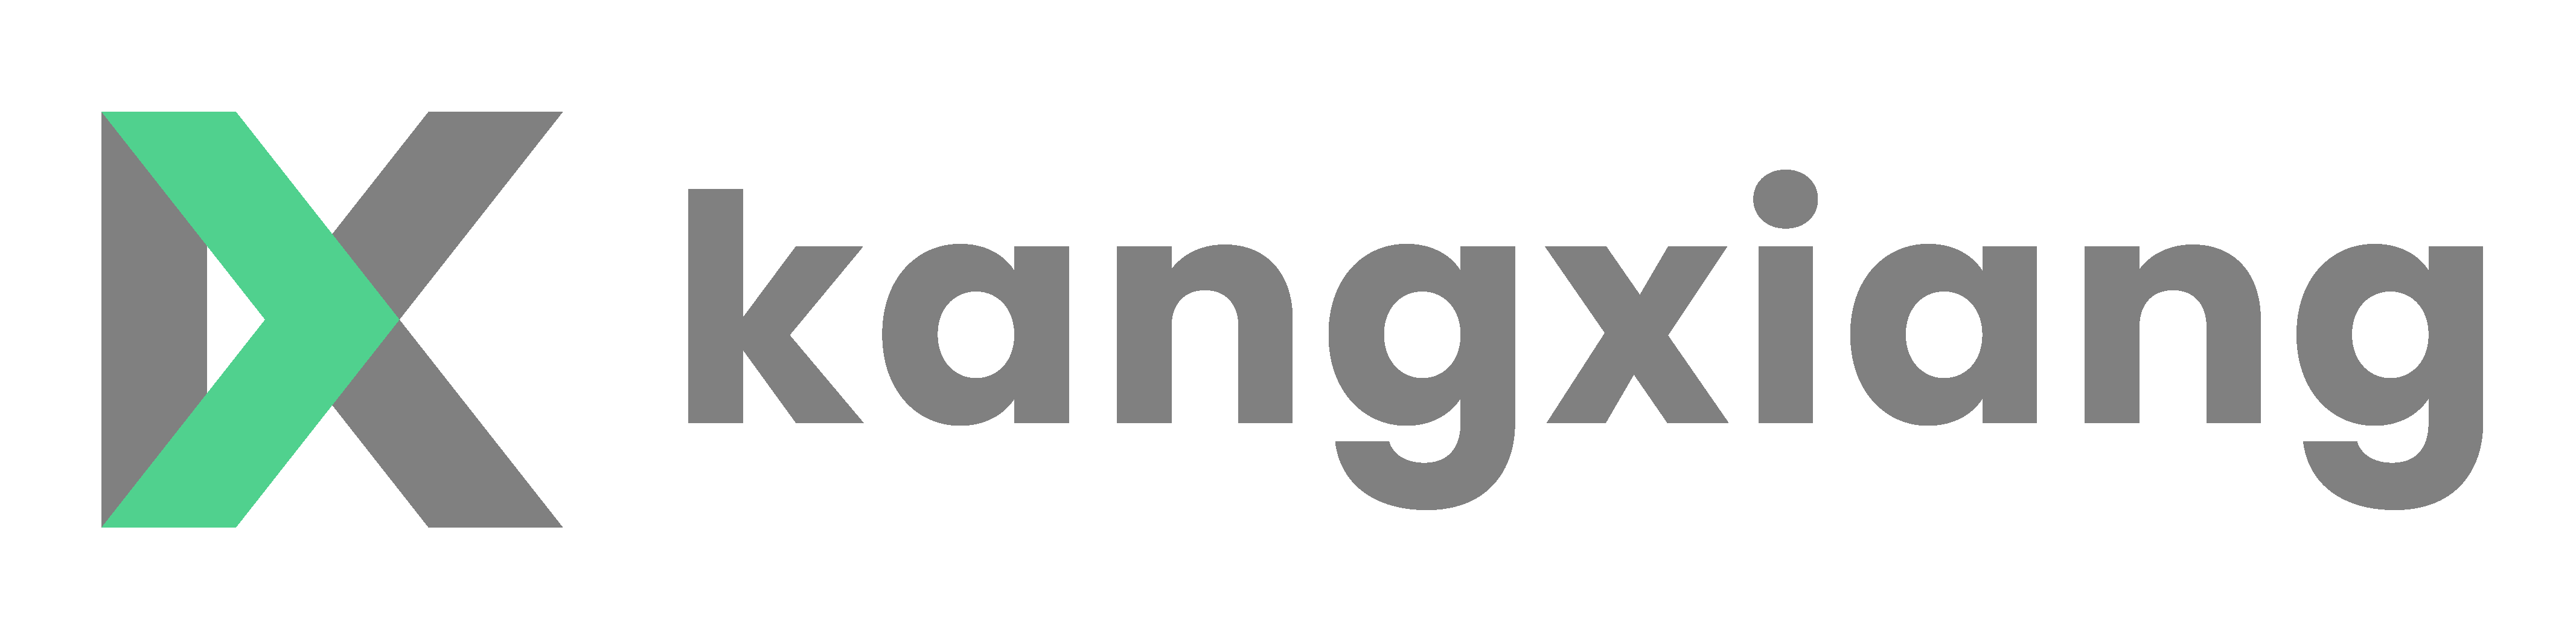 kangxiang logo web design